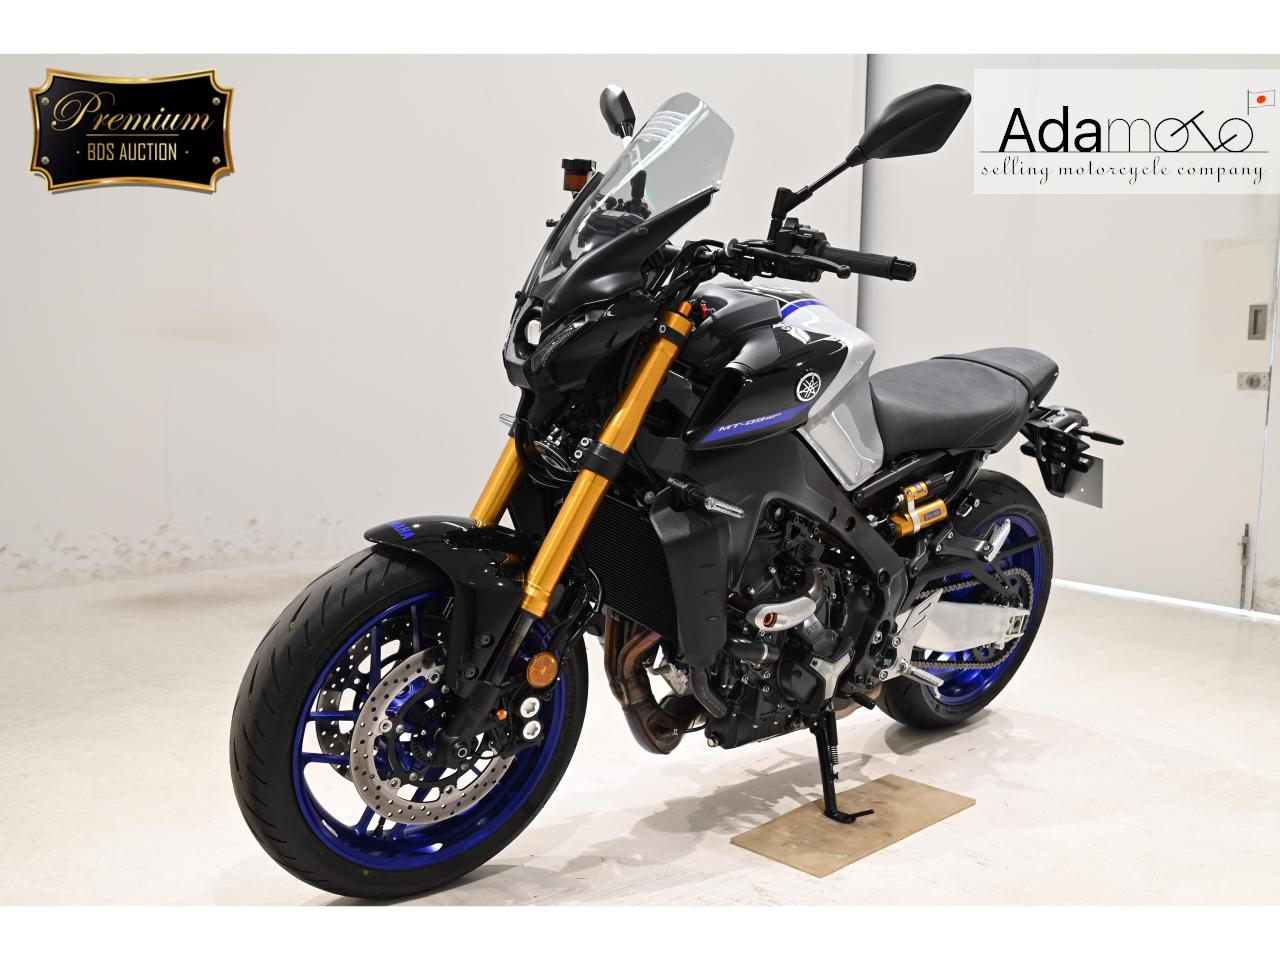 Yamaha MT 09 2SP - Adamoto - Motorcycles from Japan